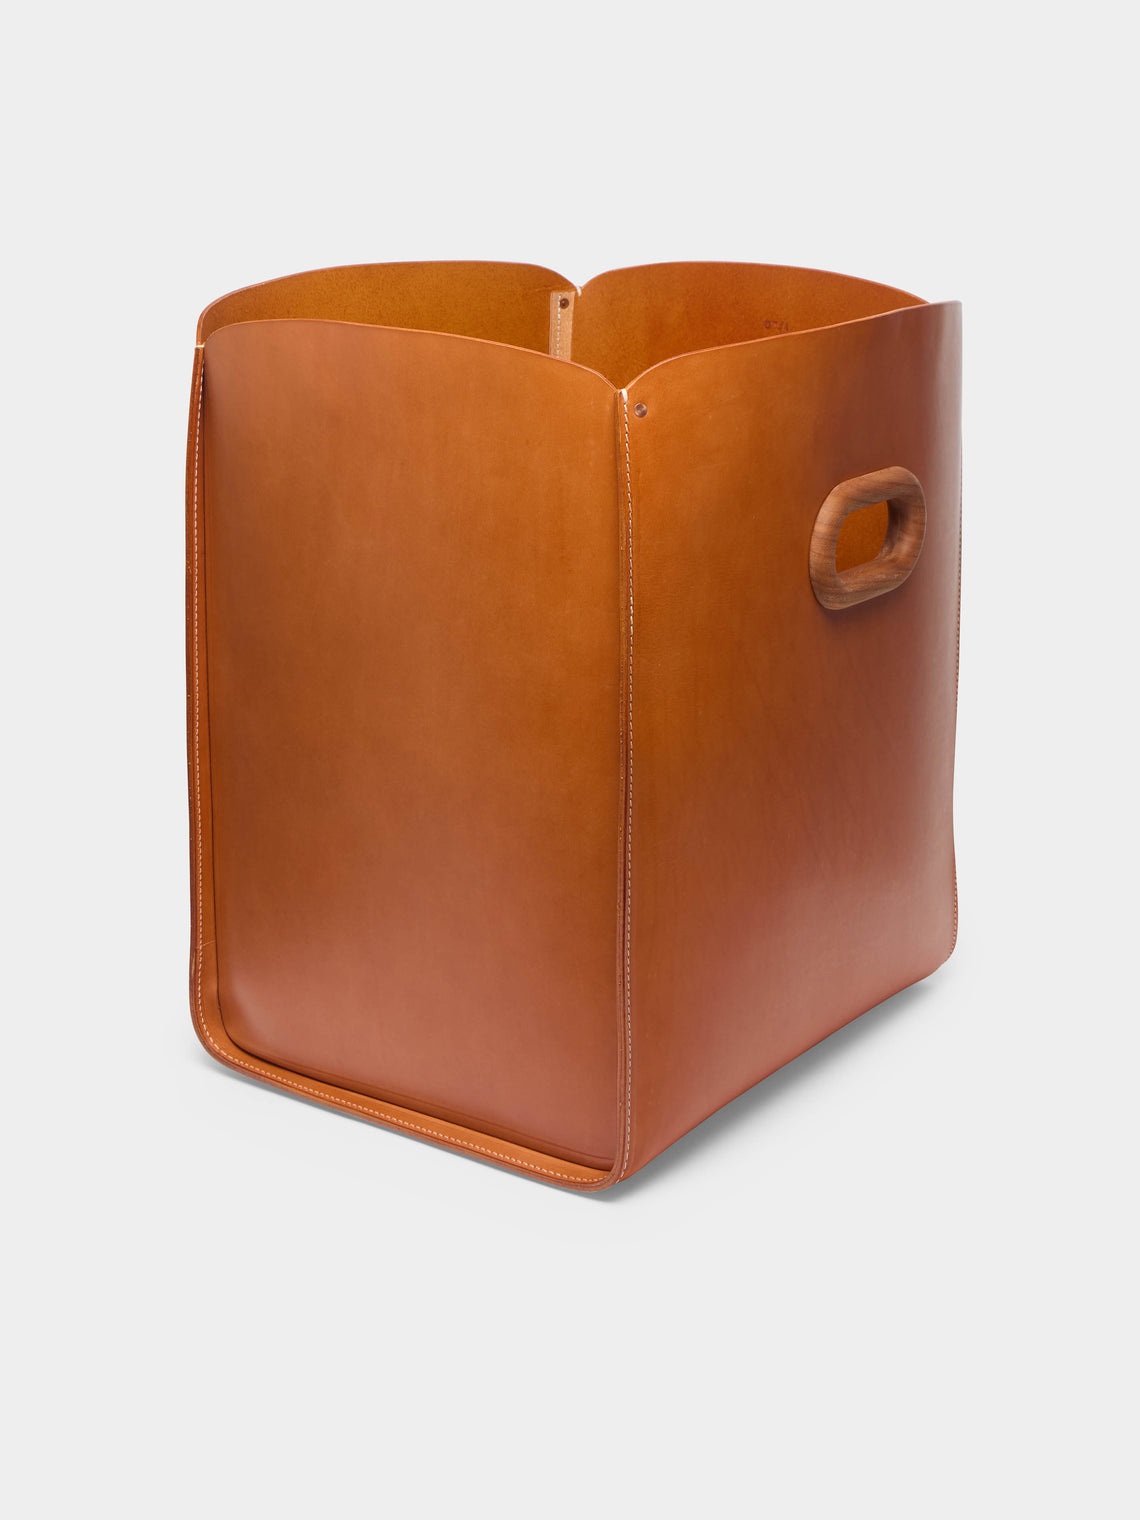 Otis Ingrams - Ample Leather Small Storage Basket -  - ABASK - 